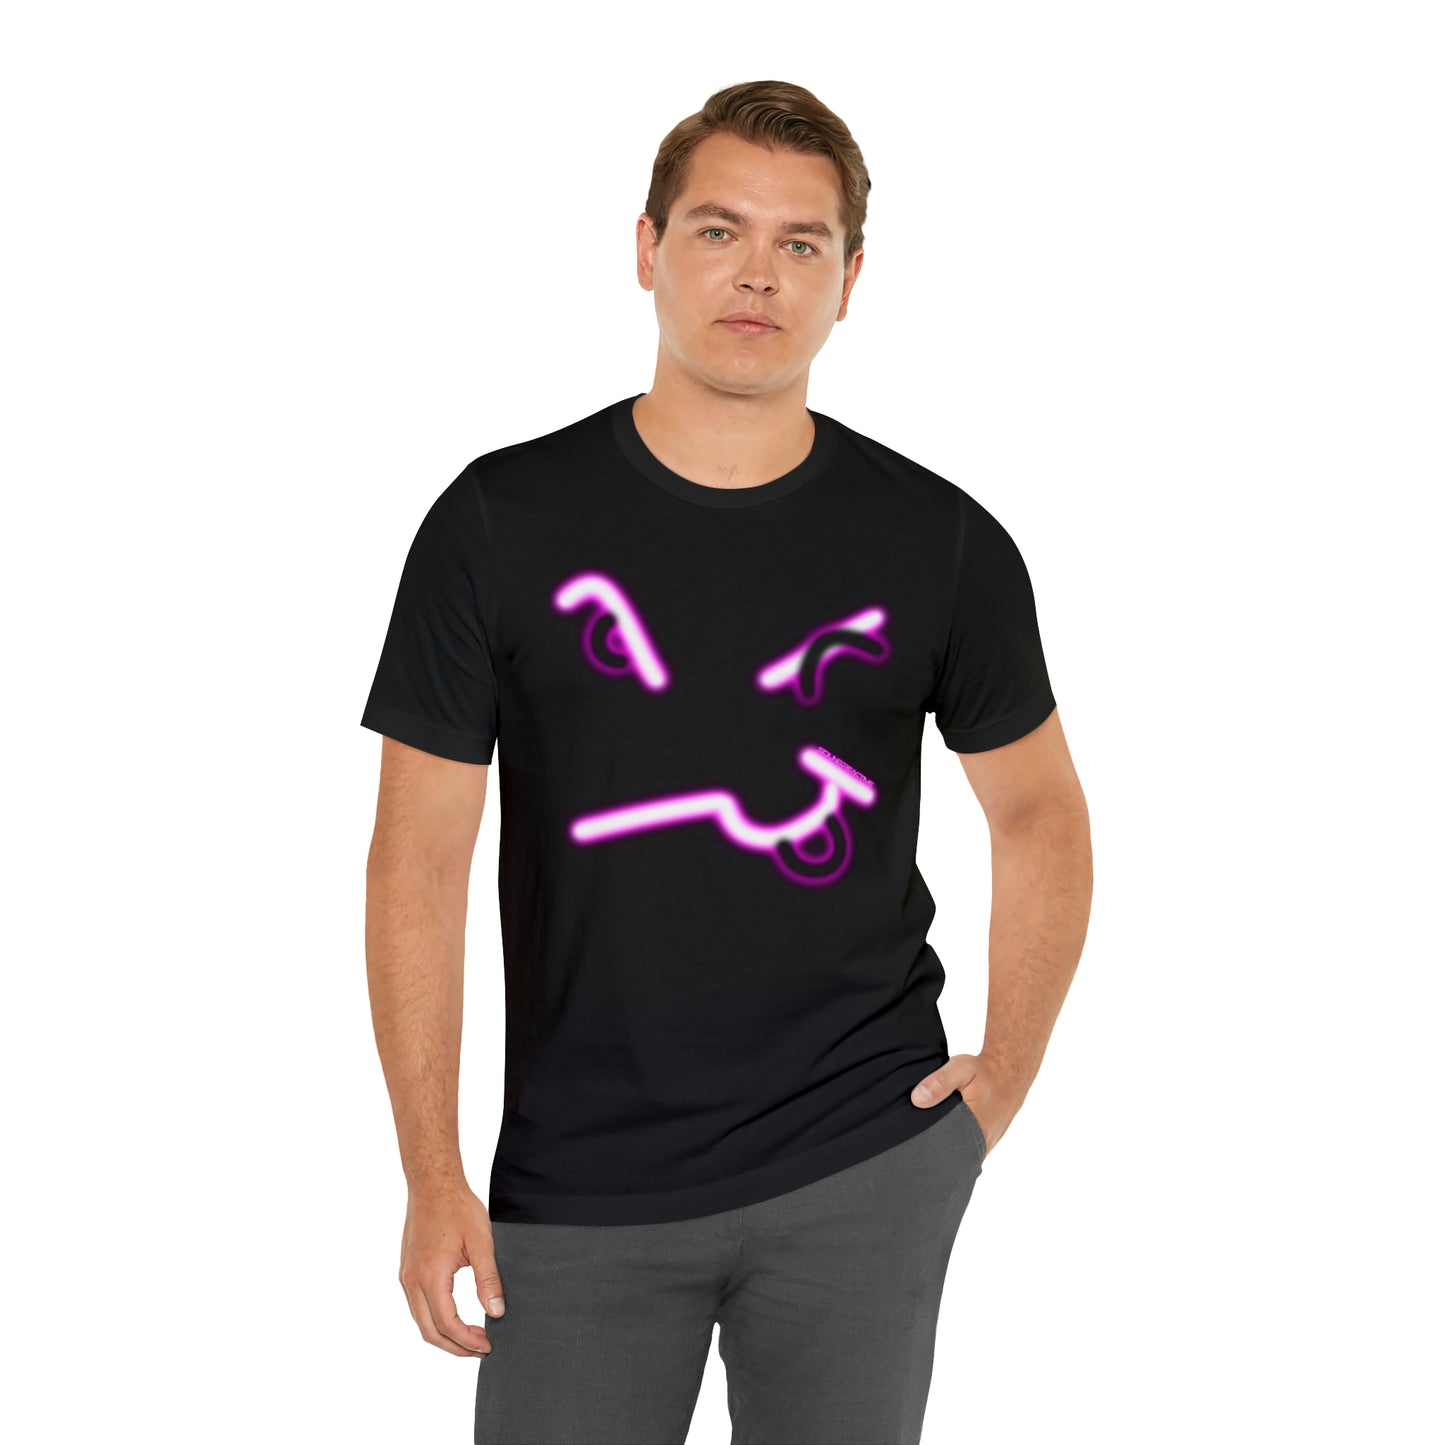 HUBOPTIC® Original Sound Reactive SMILEY V2 Electro Graphic T-shirt